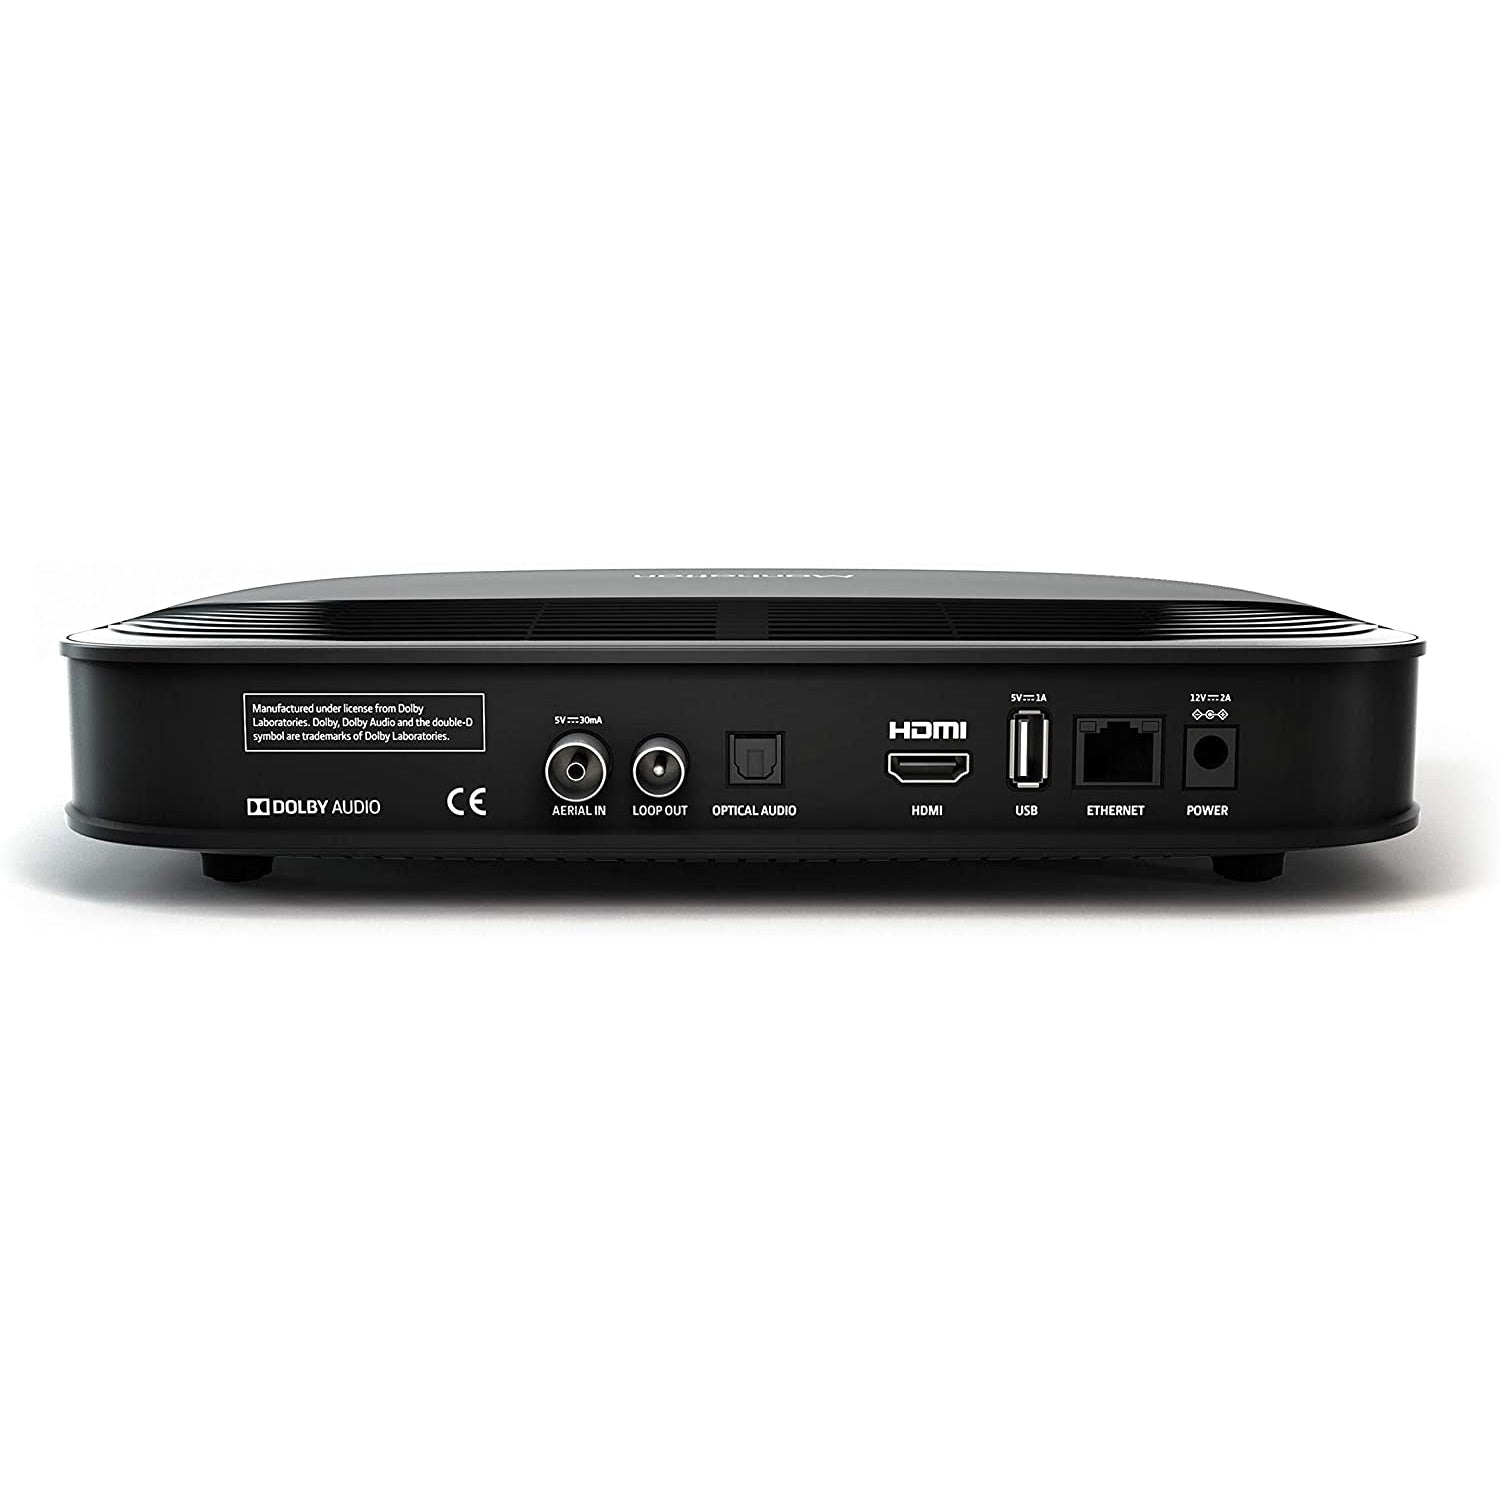 Manhattan T3-R Smart Freeview Play TV Recorder, 500GB - Black - Refurbished Good